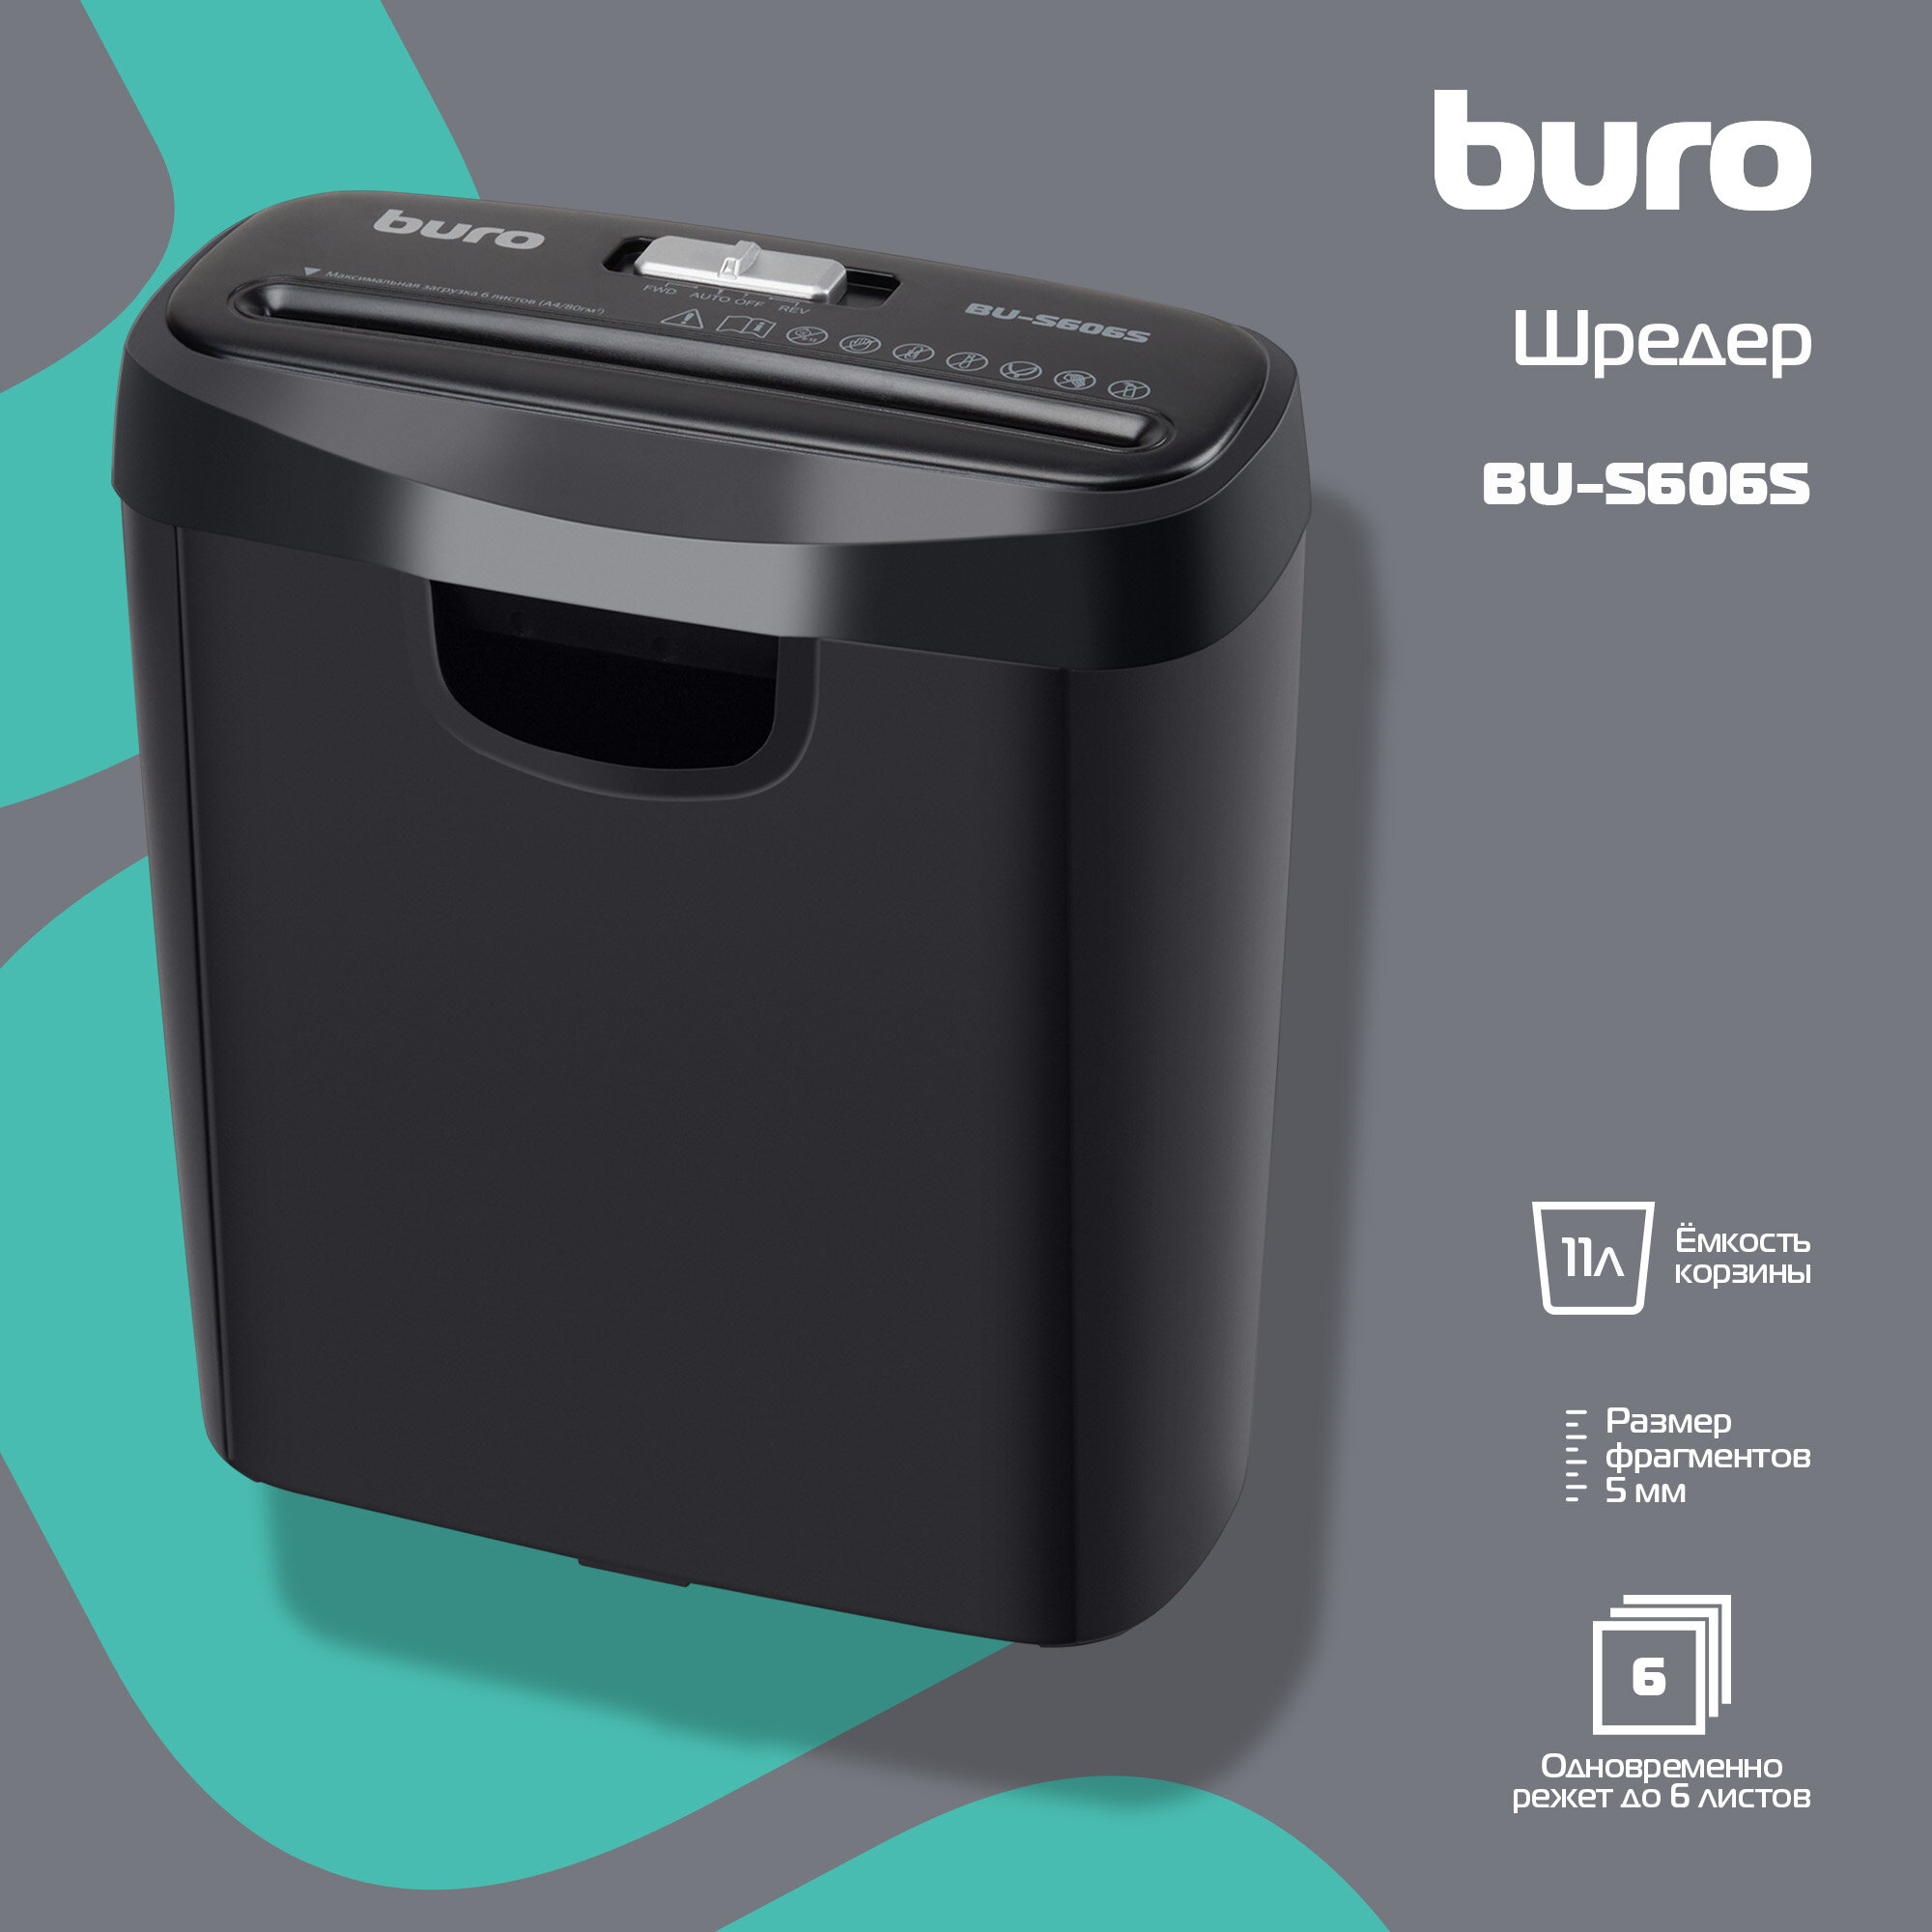 Уничтожитель бумаги Buro Home BU-S606S